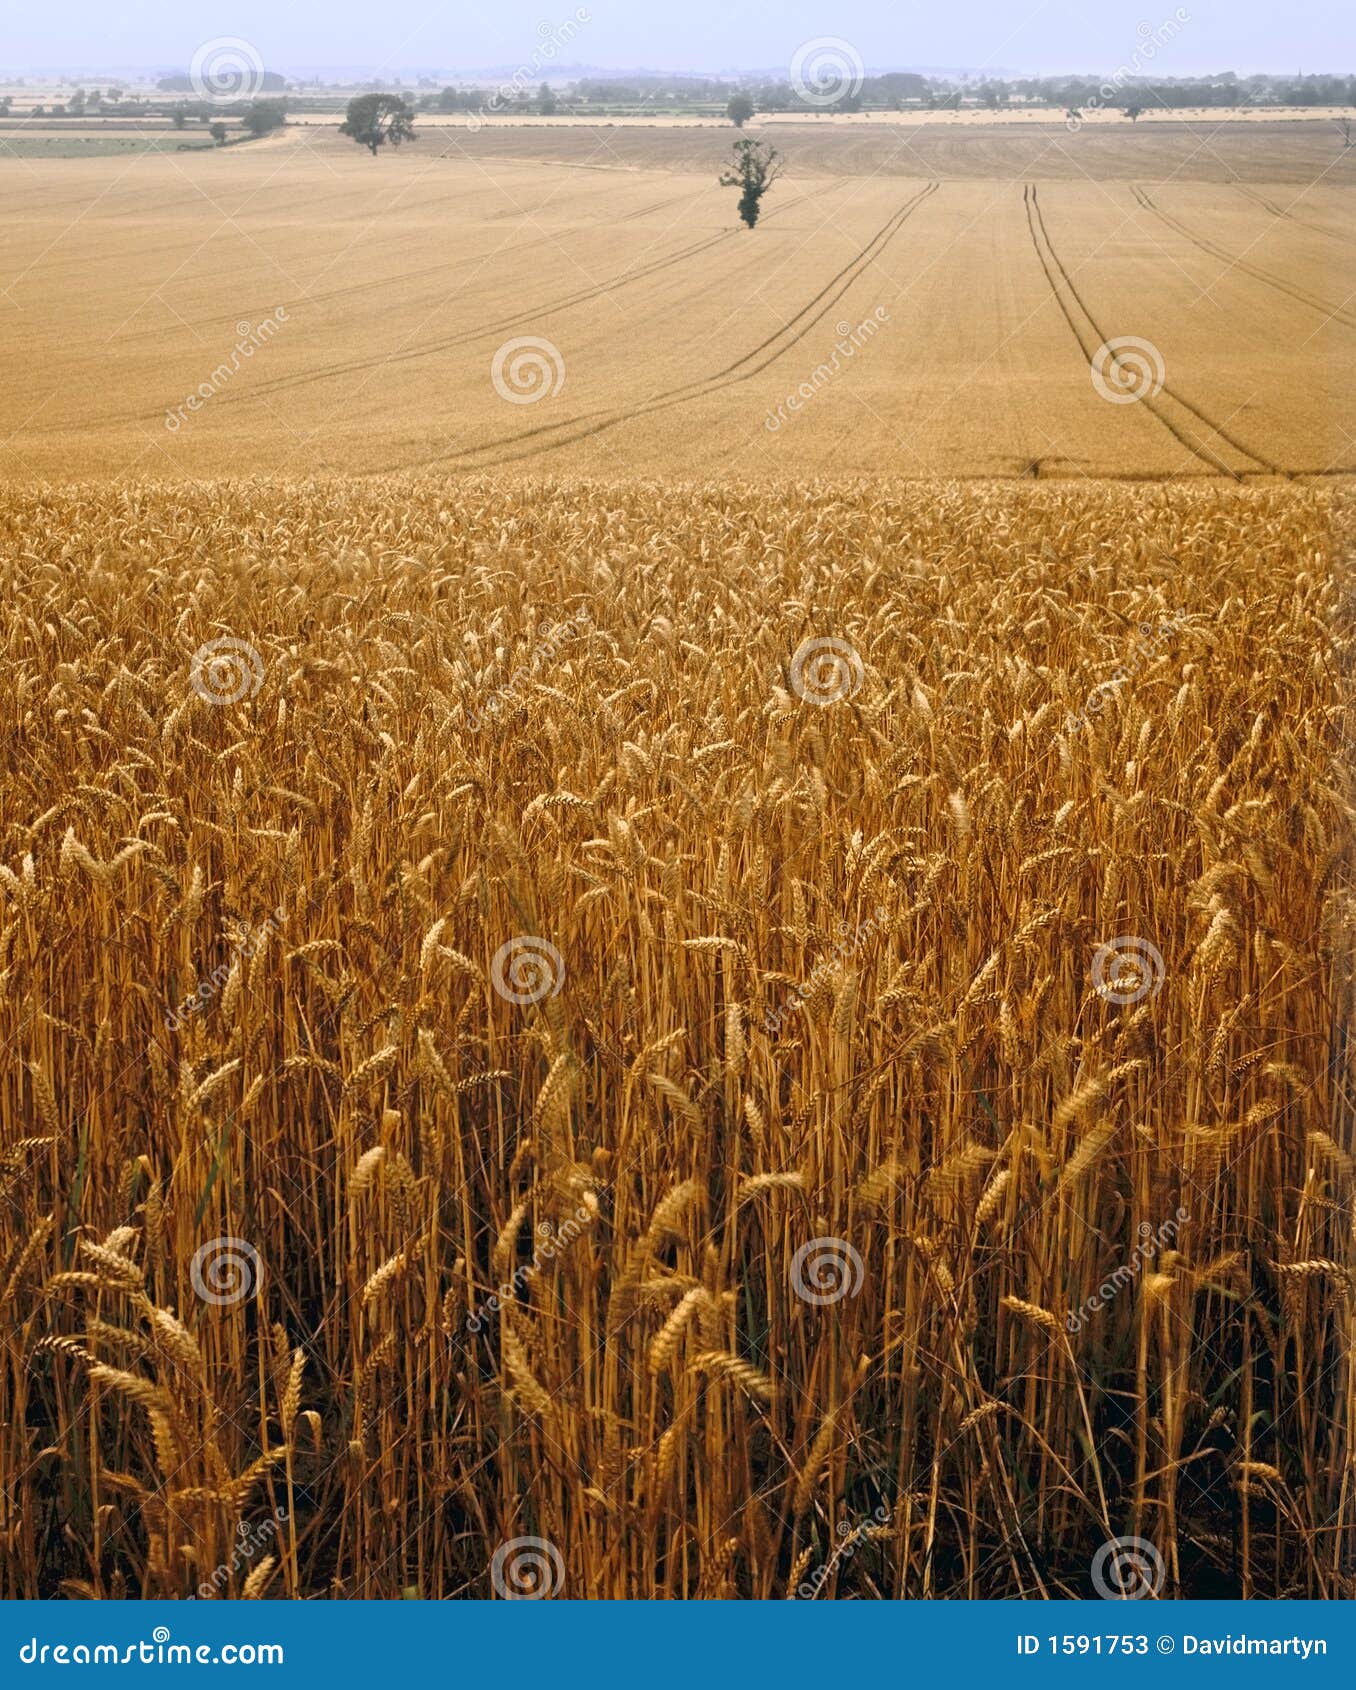 view across cornfield agricultural landscape